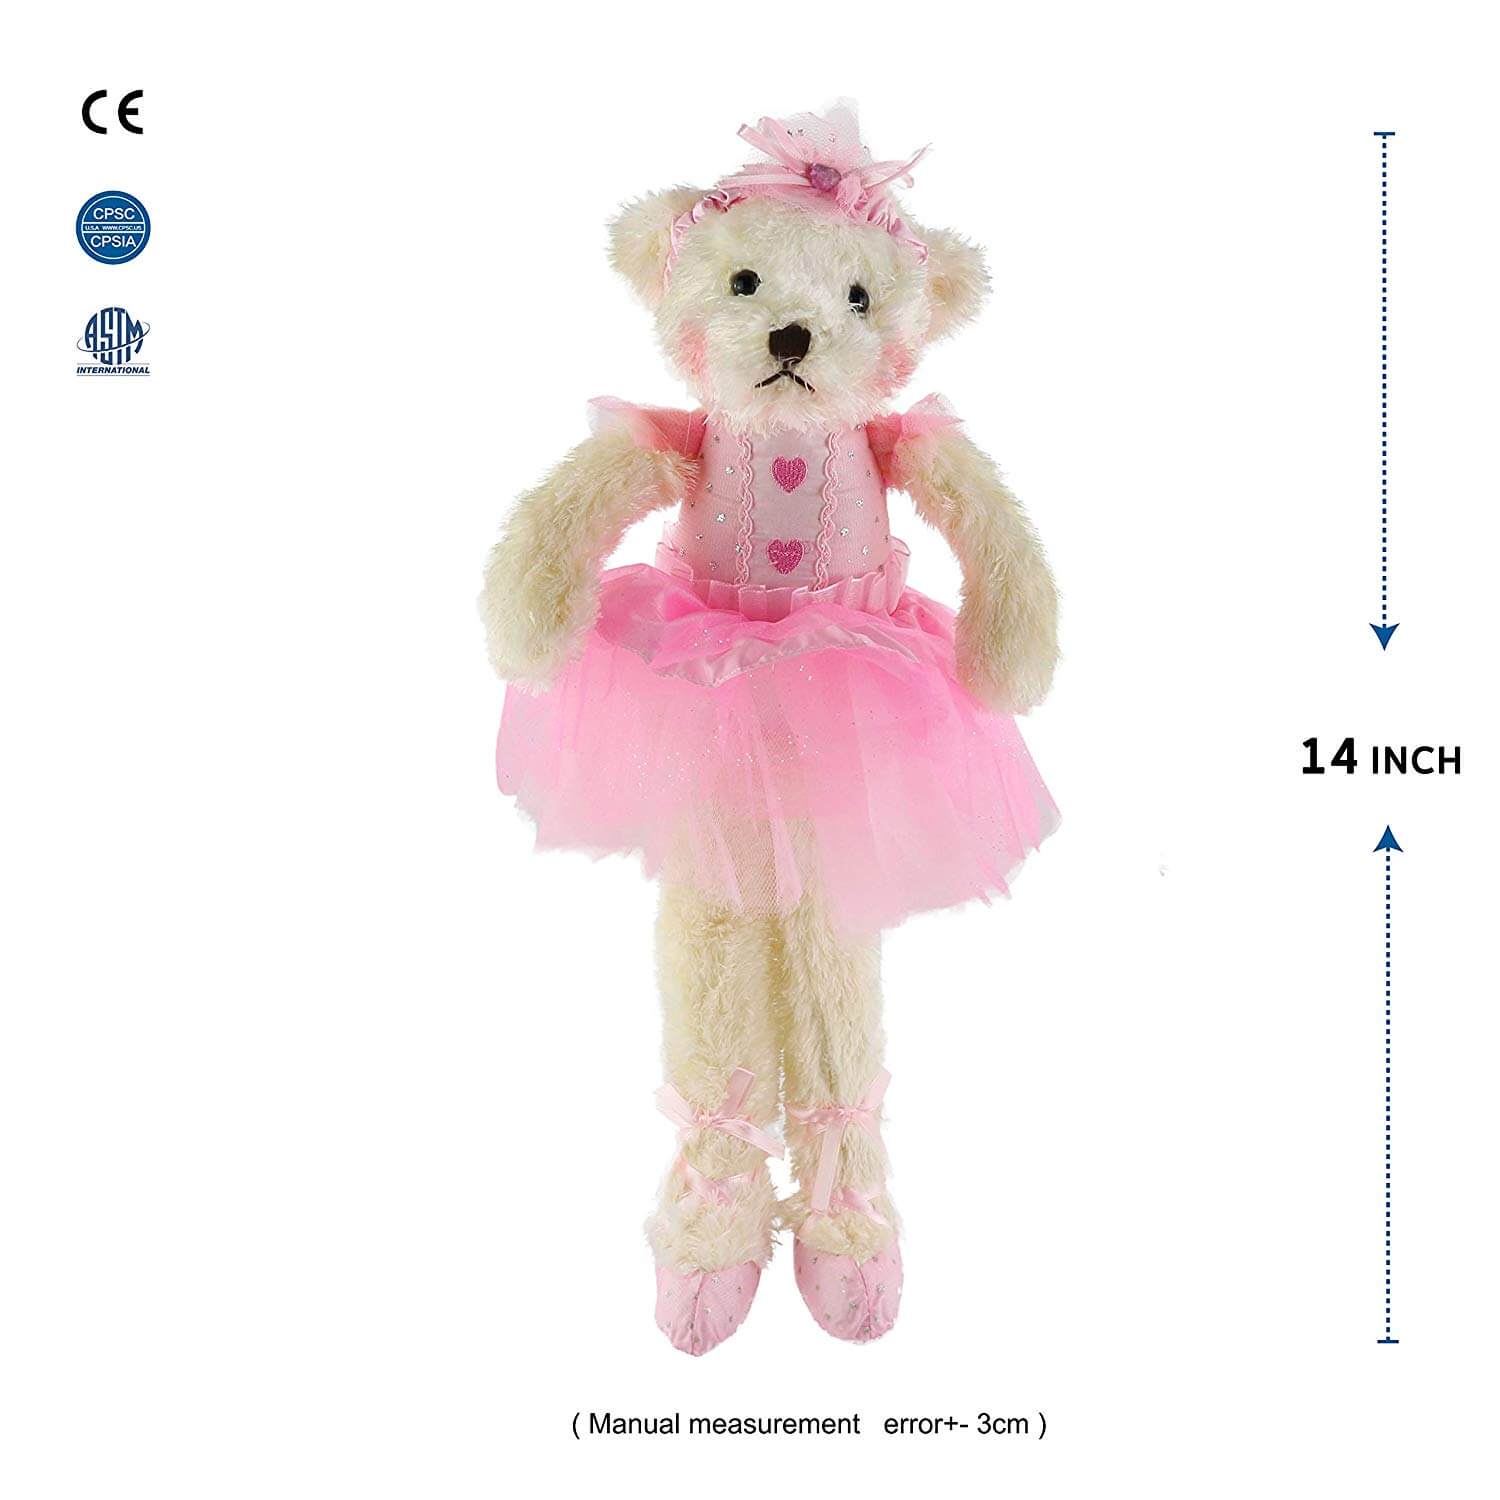 ballerina teddy bear pink stuffed animal 15-inch | Bstaofy - Glow Guards